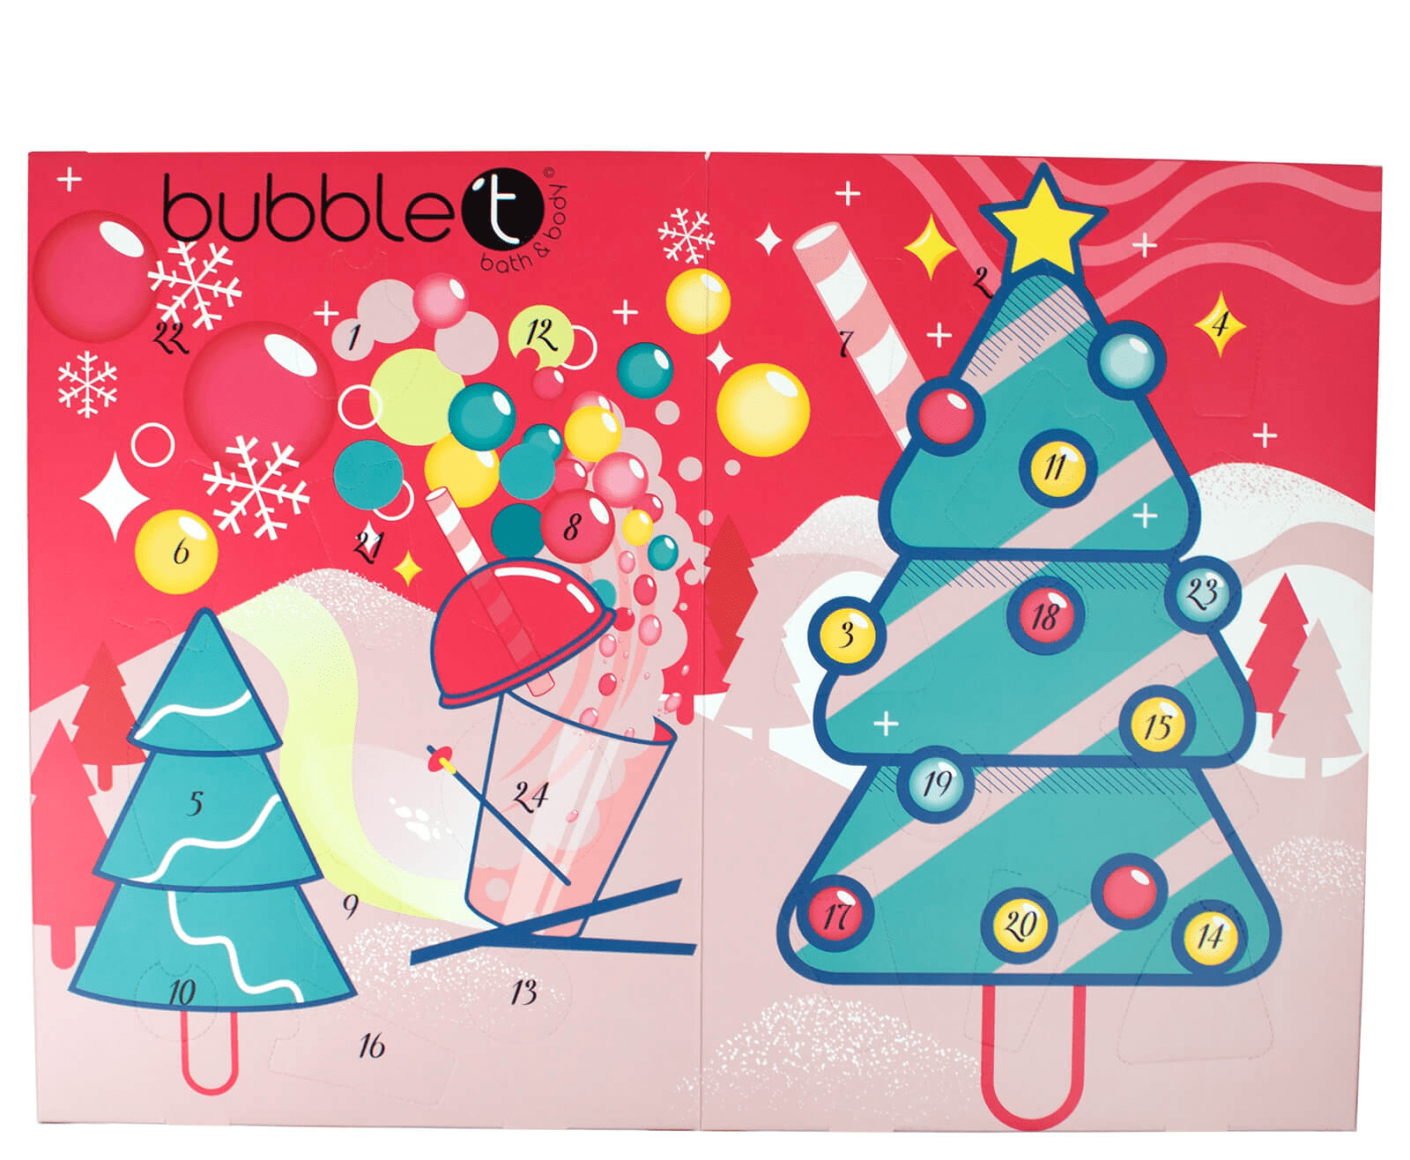 2018 Bubble T Advent Calendar Available Now! Hello Subscription